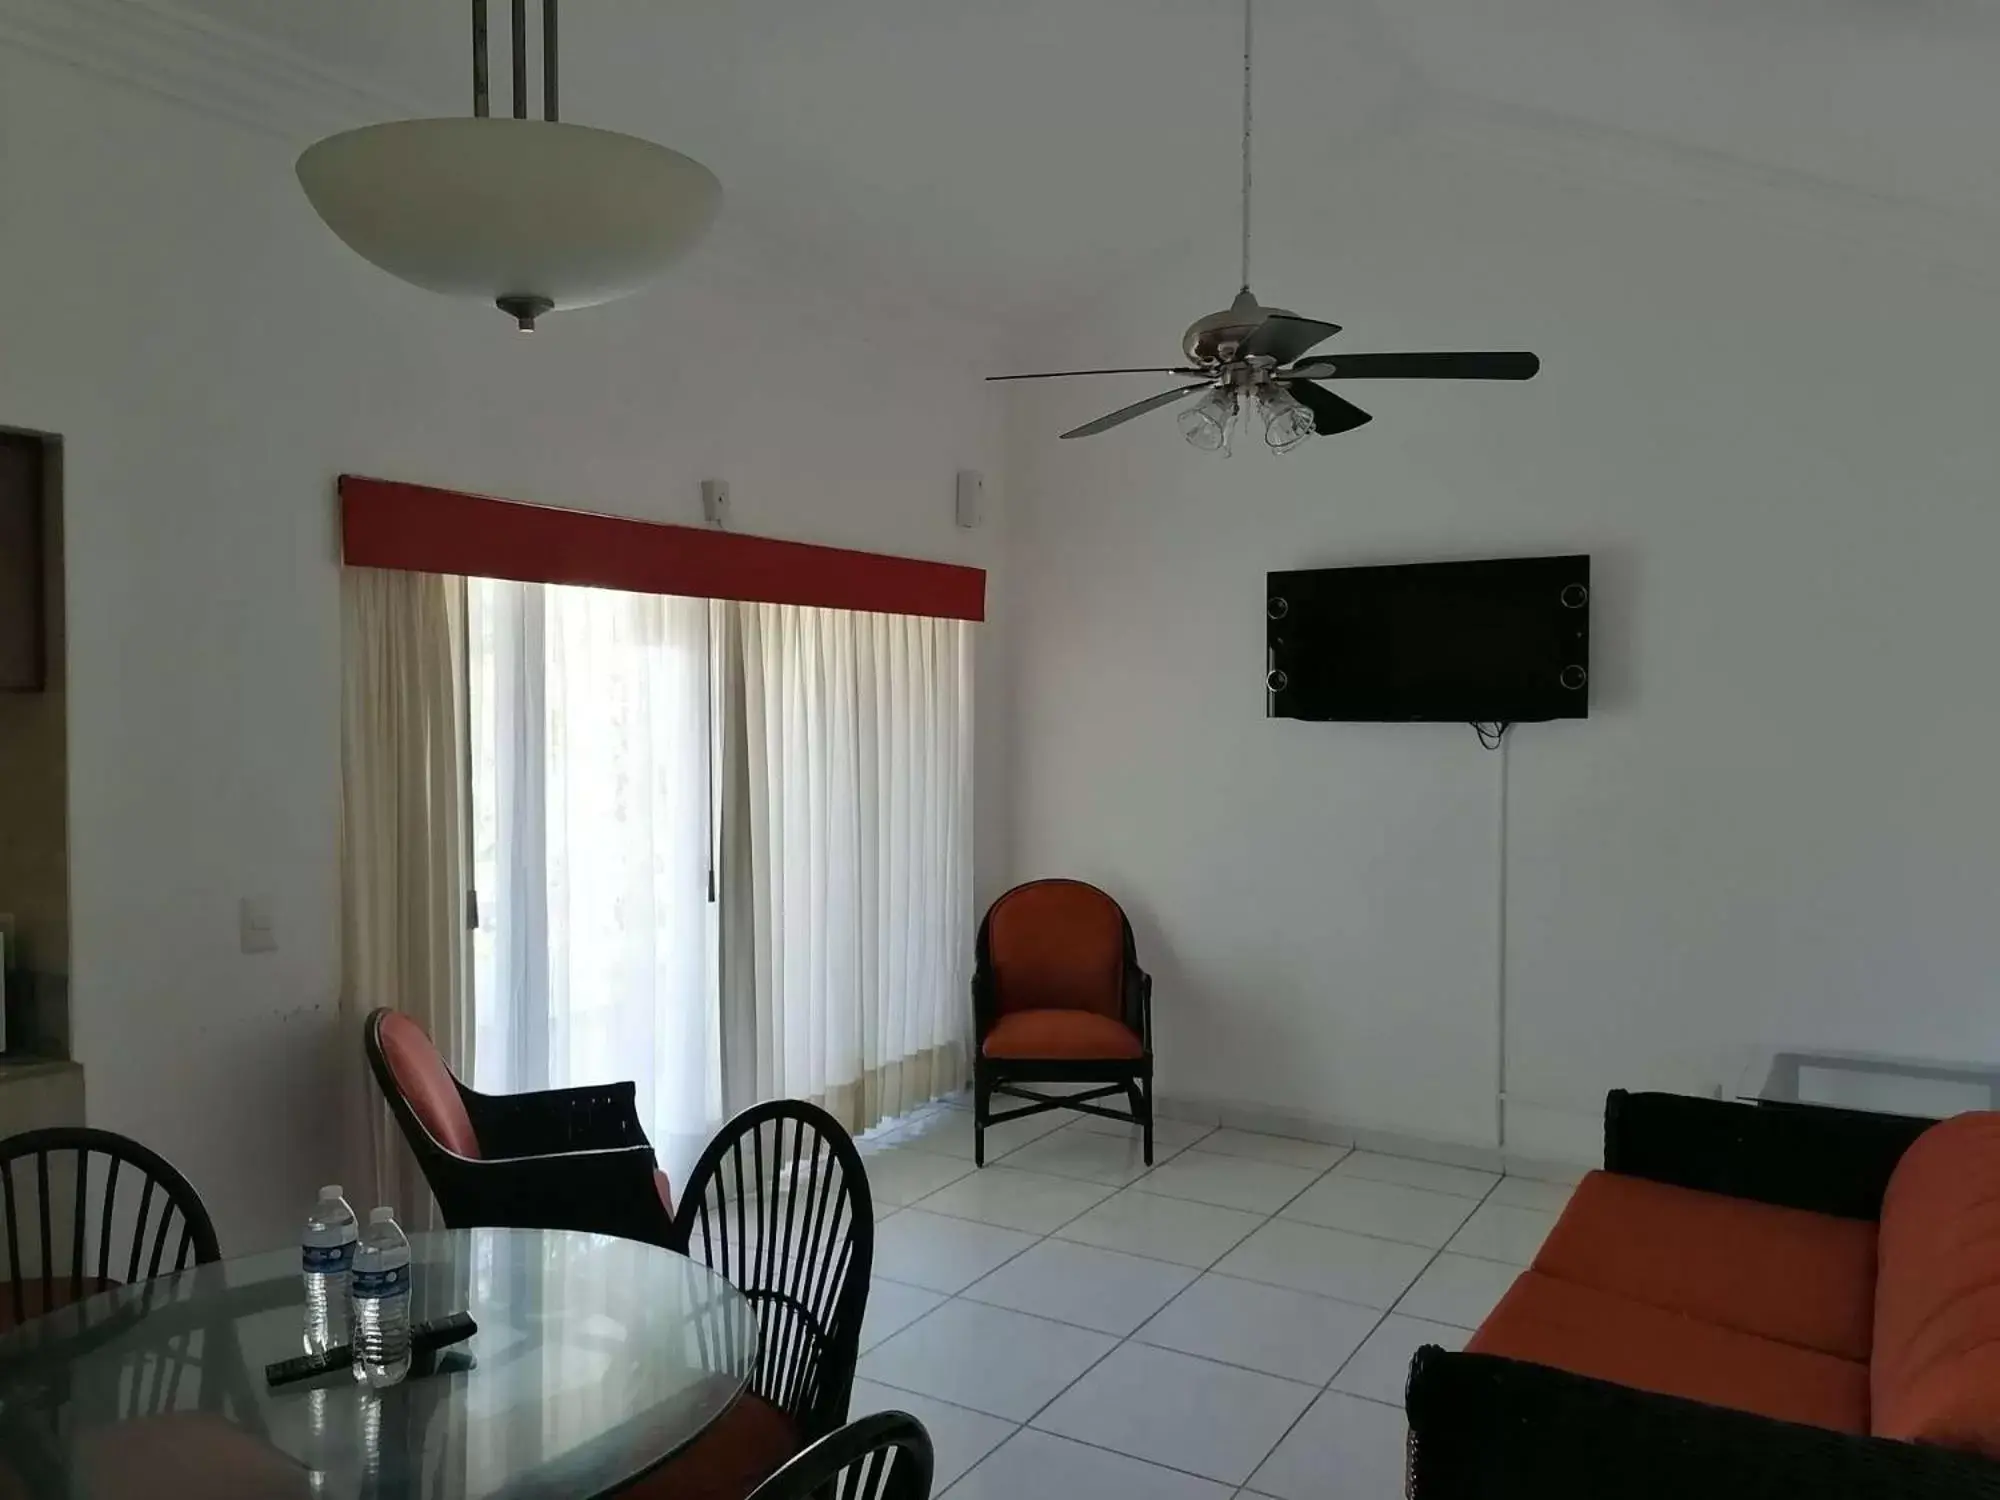 Photo of the whole room, Seating Area in Villas del Palmar Manzanillo with Beach Club